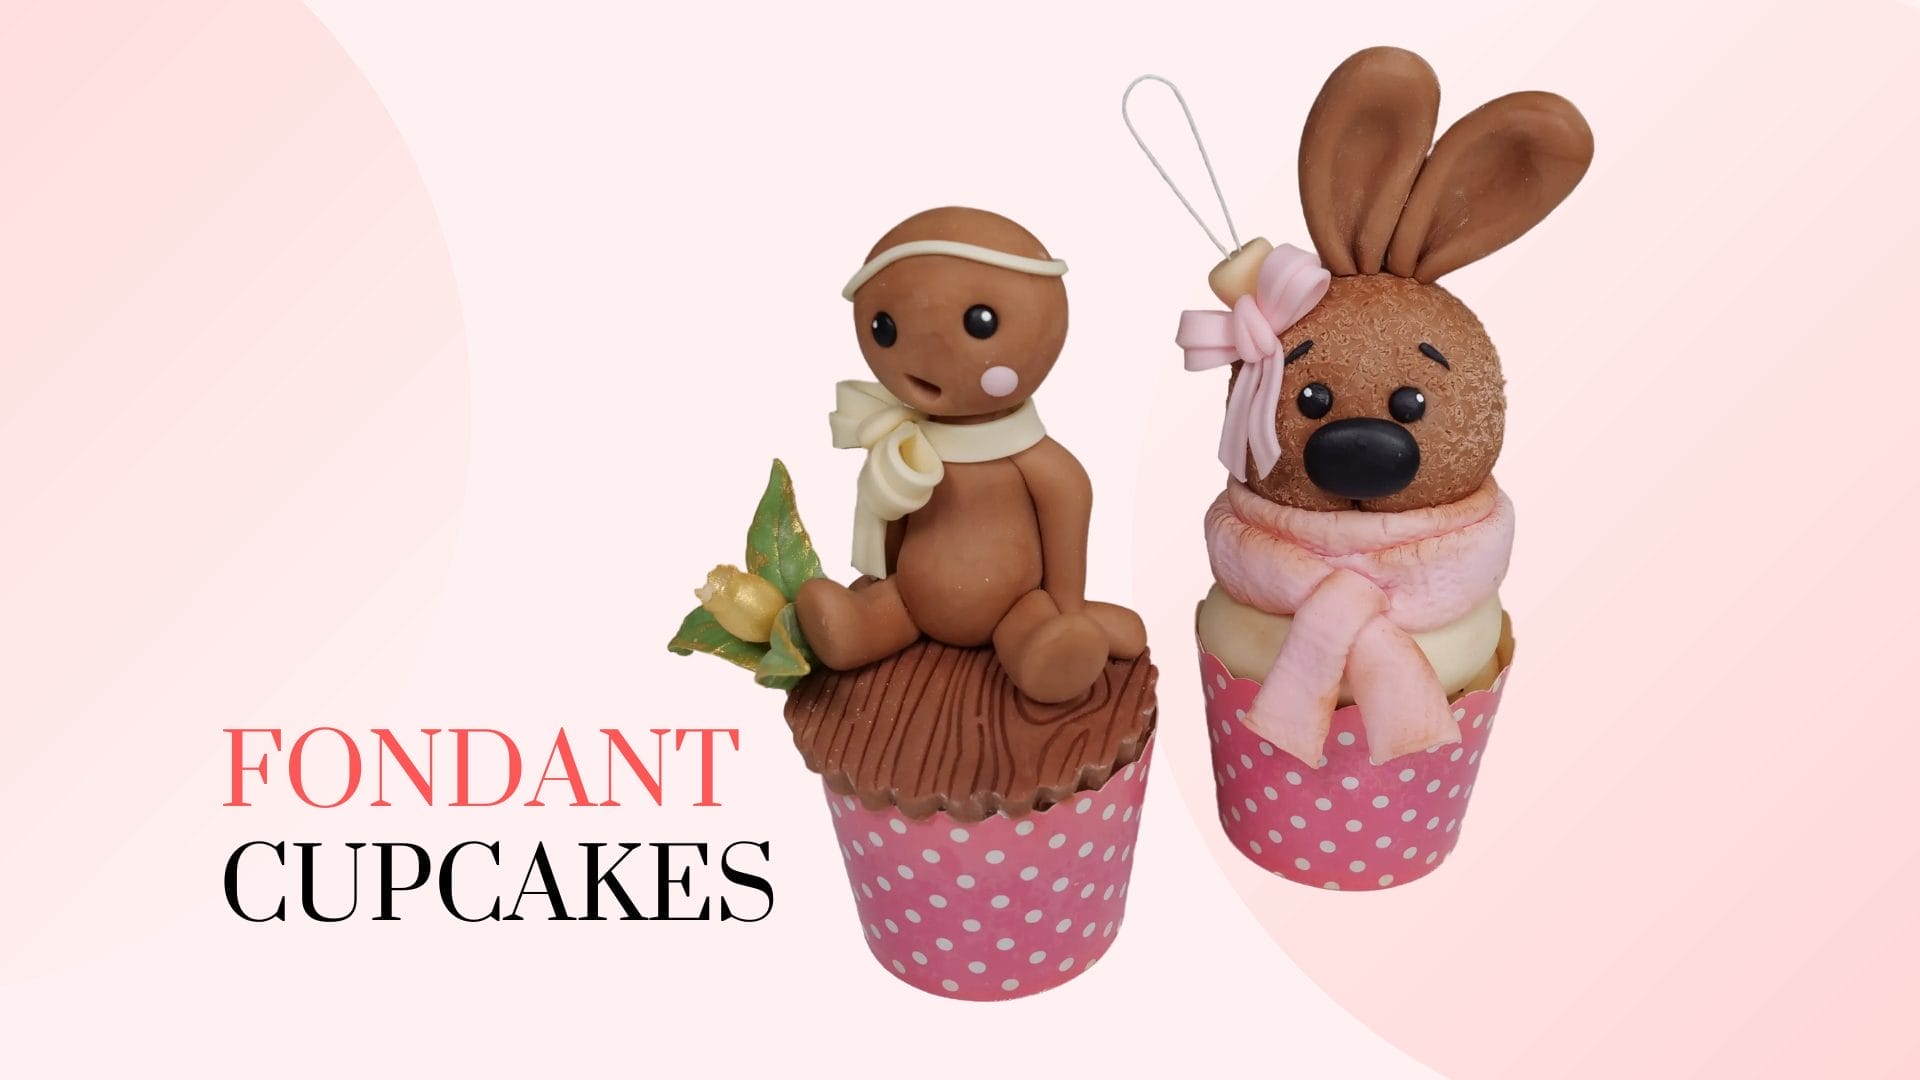 Fondant cupcakes with a teddy bear and bunny.